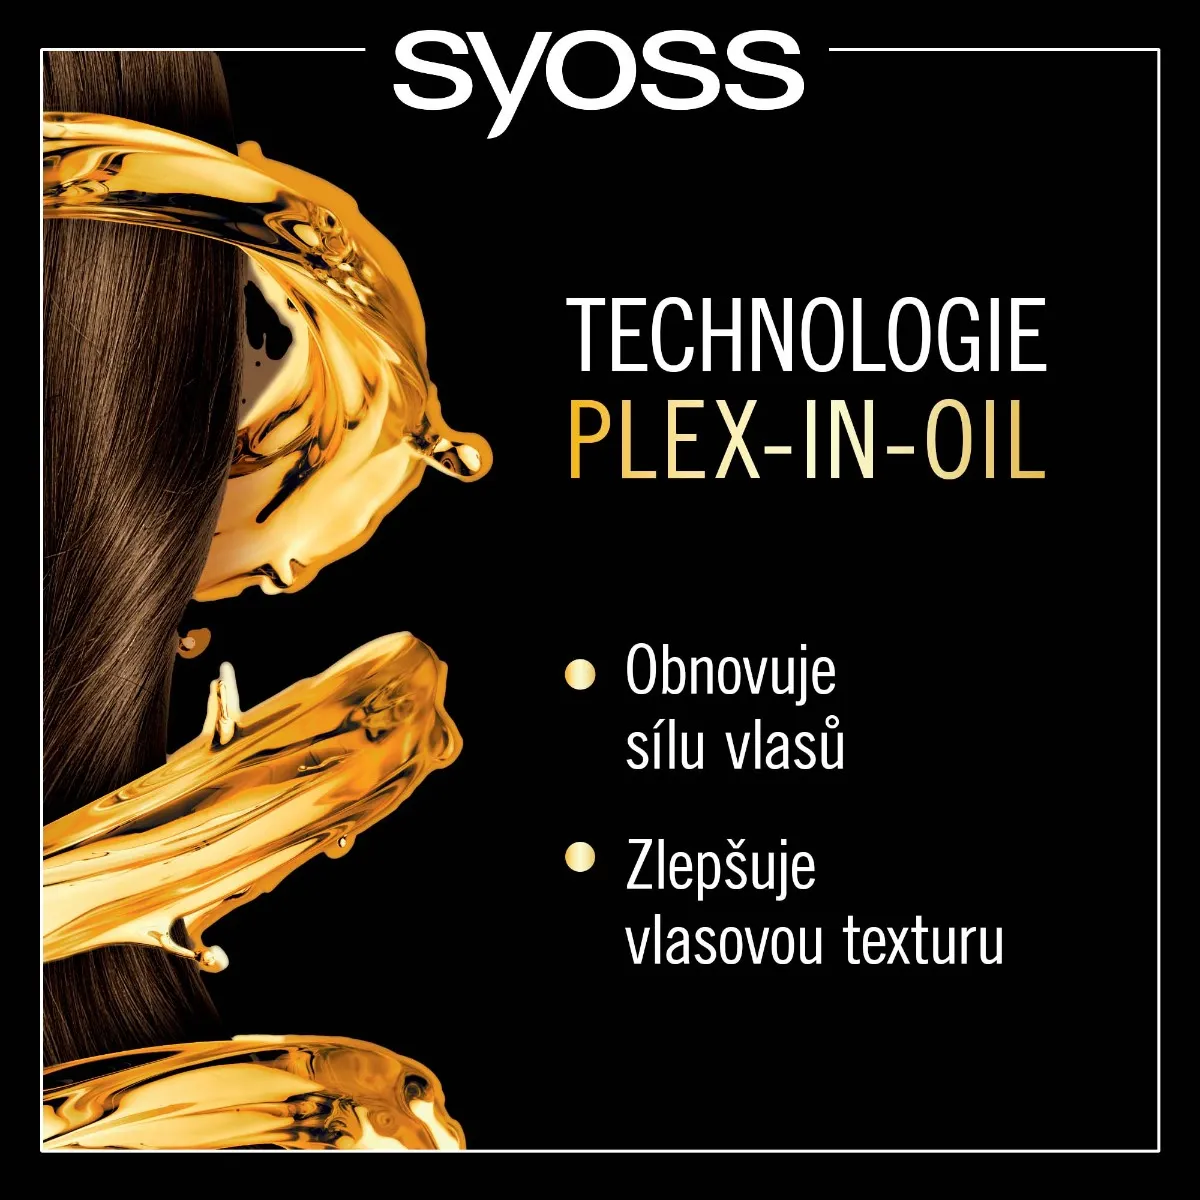 Syoss Oleo Intense Barva na vlasy 8-05 béžově plavá 50 ml